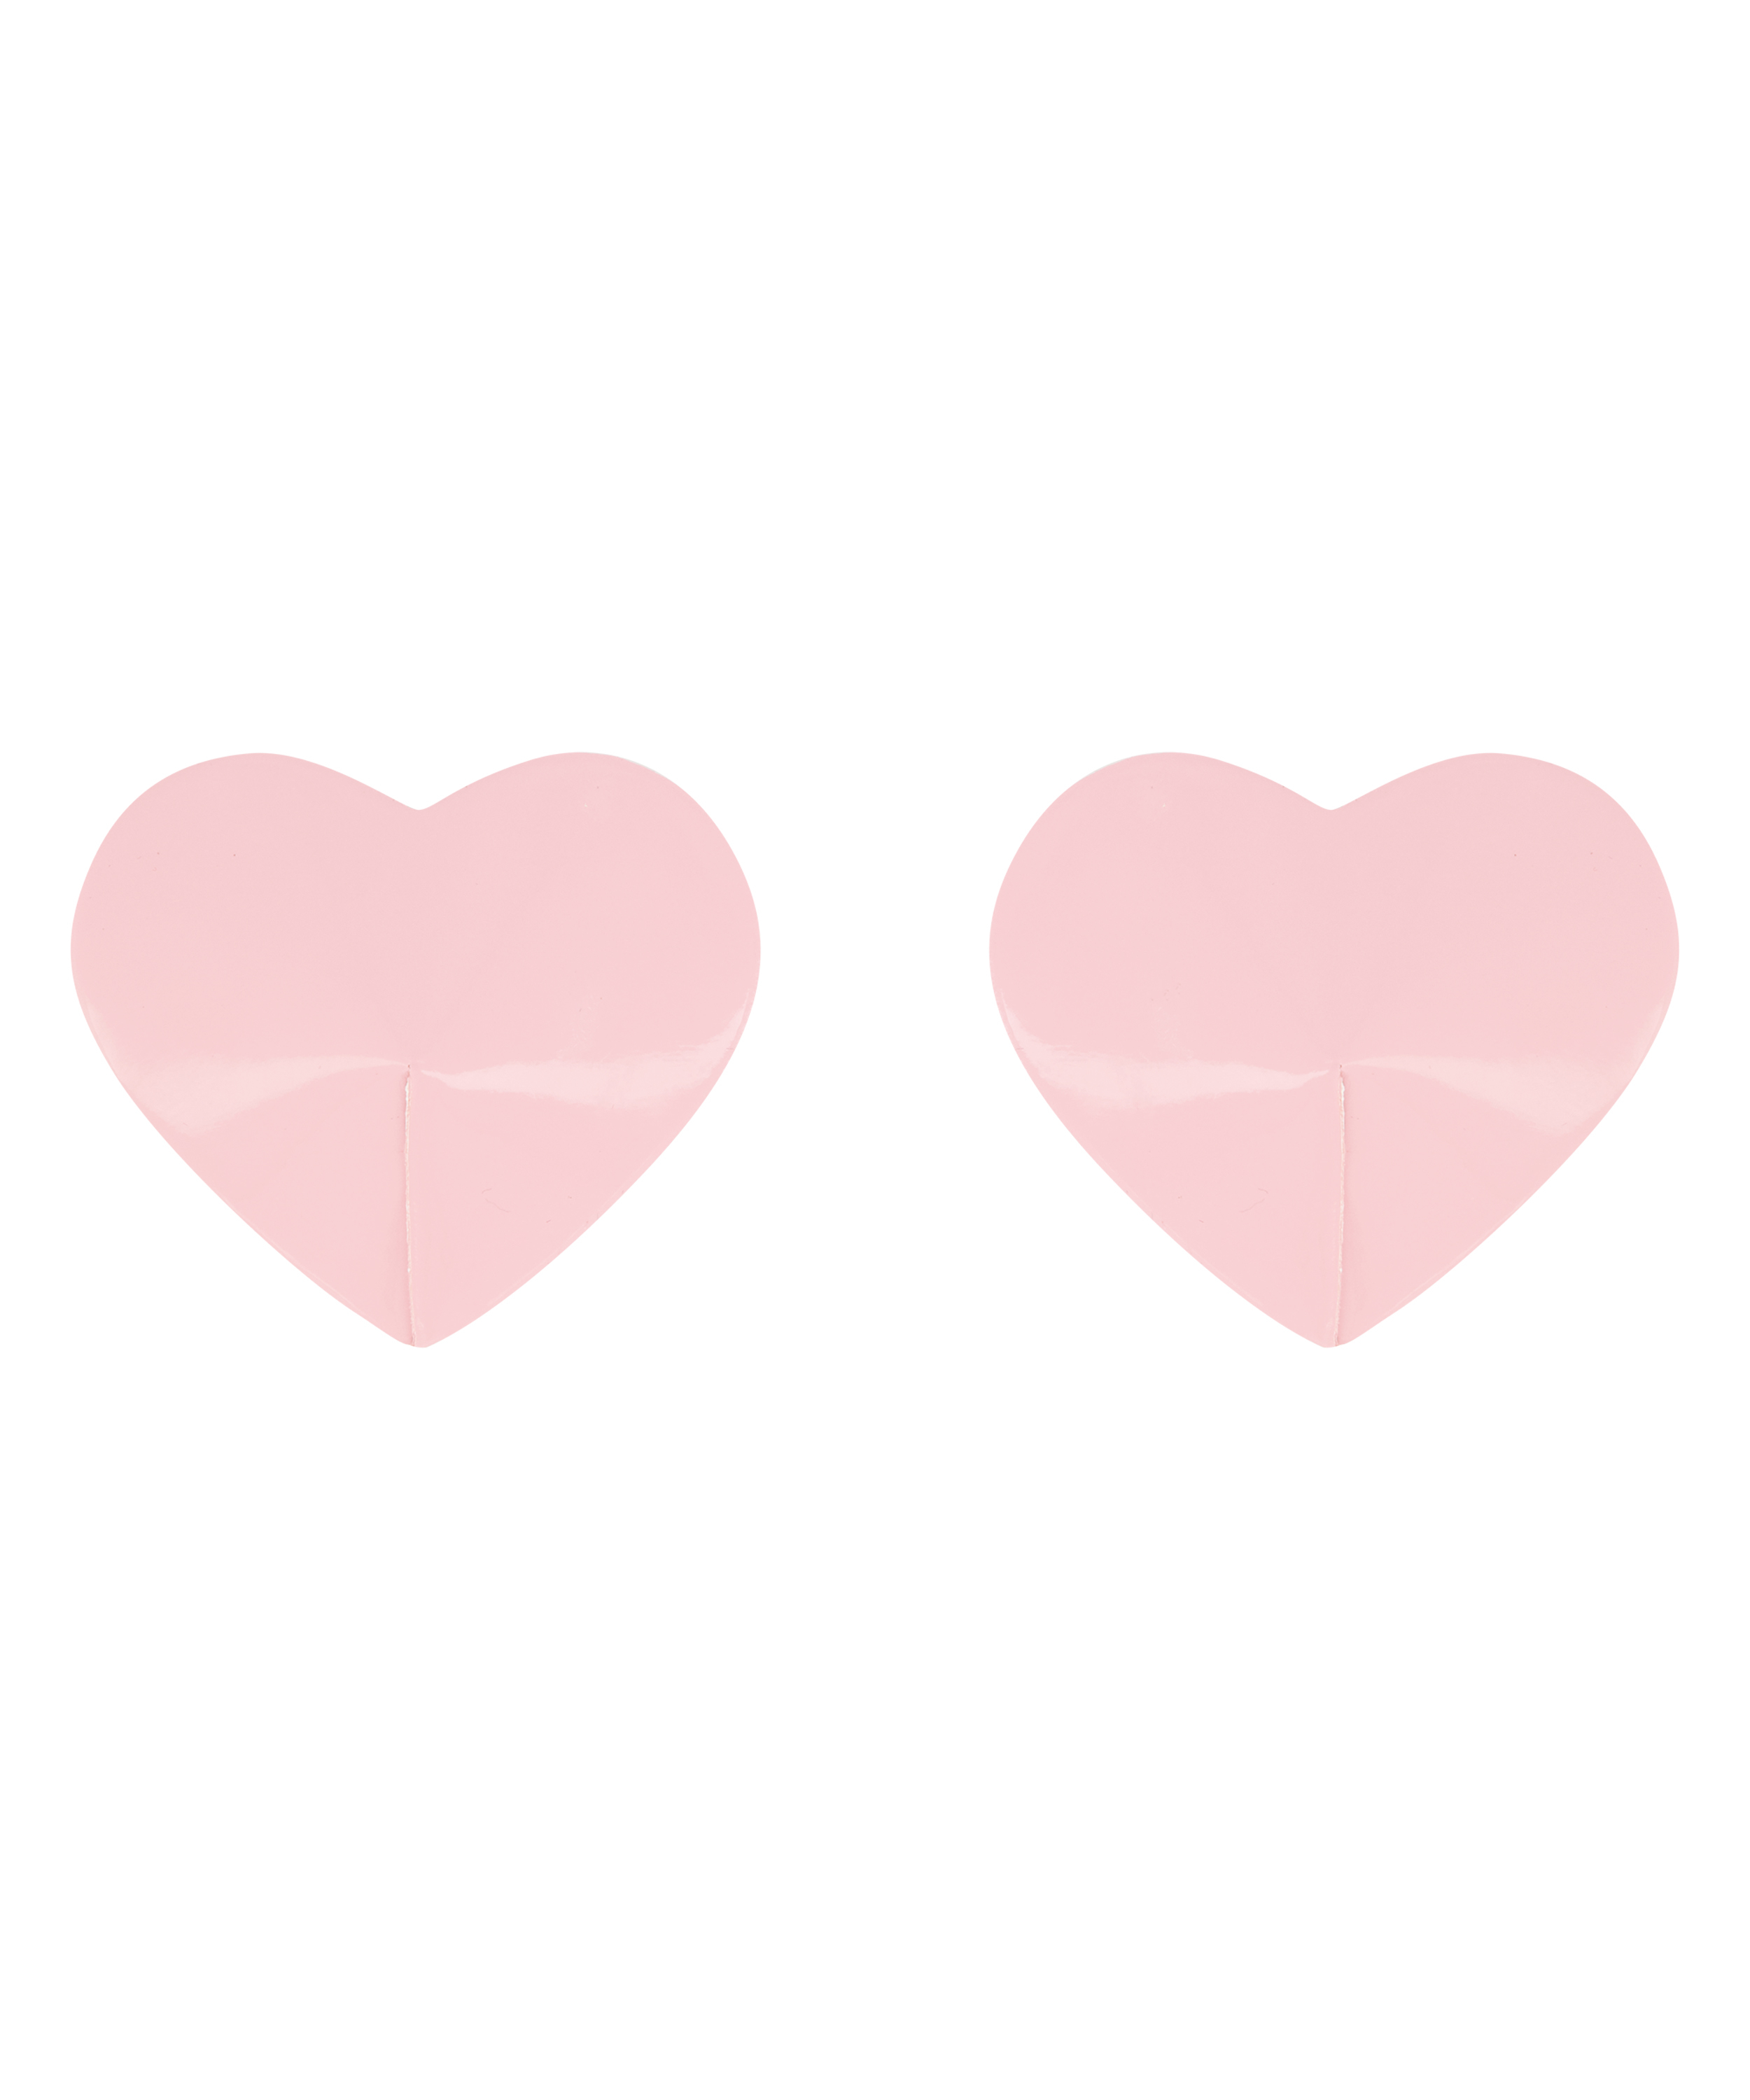 Private Heart brystvorteskjulere, pink, main